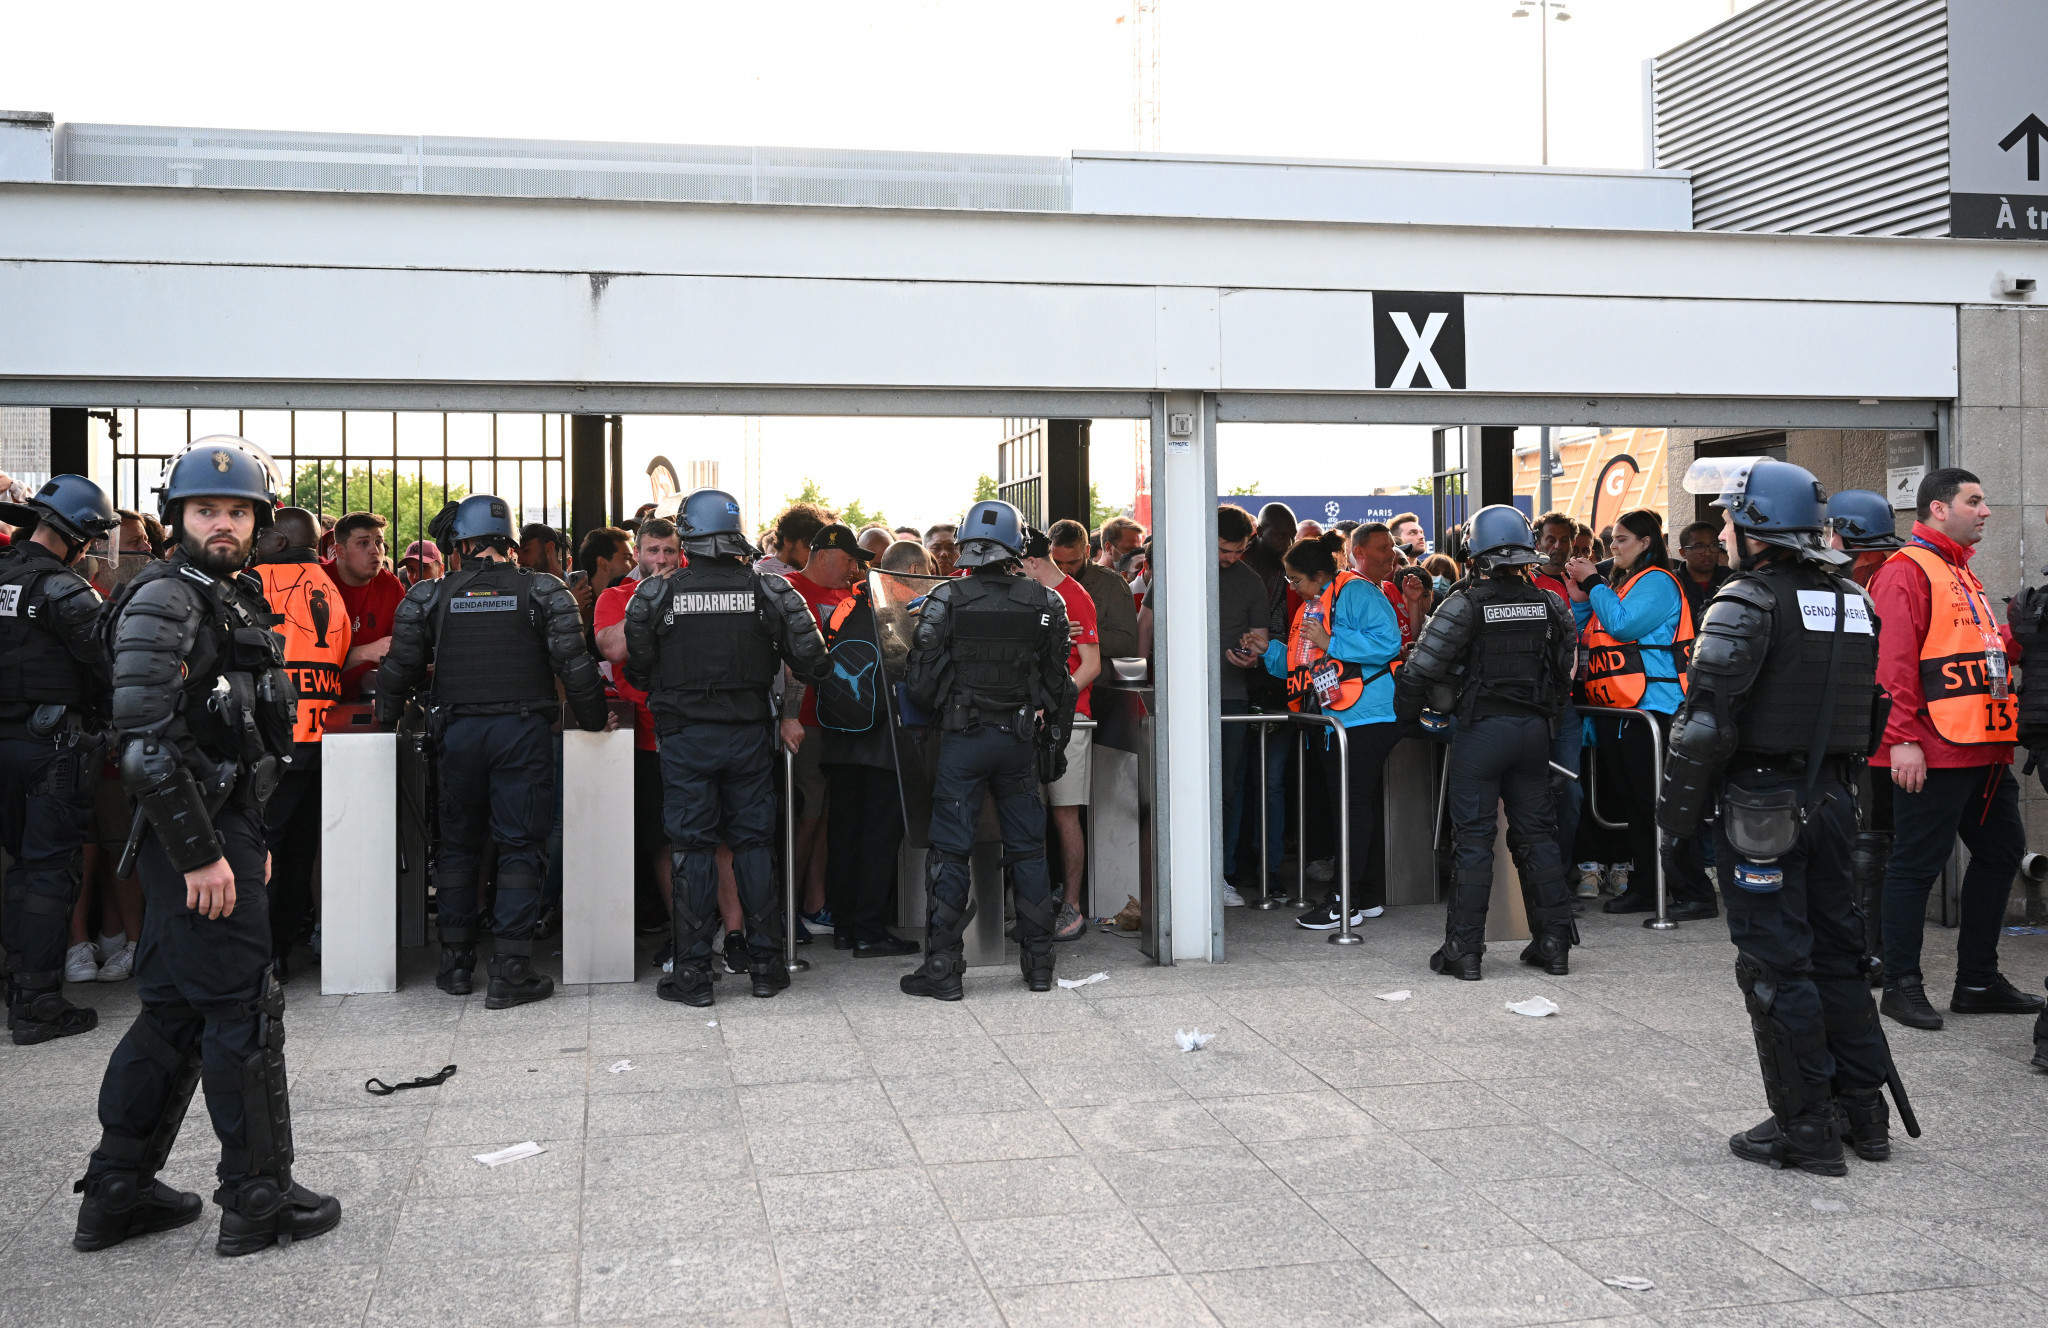 Security issues outside Paris 2024 venue Stade de France delay start of UEFA Champions League final